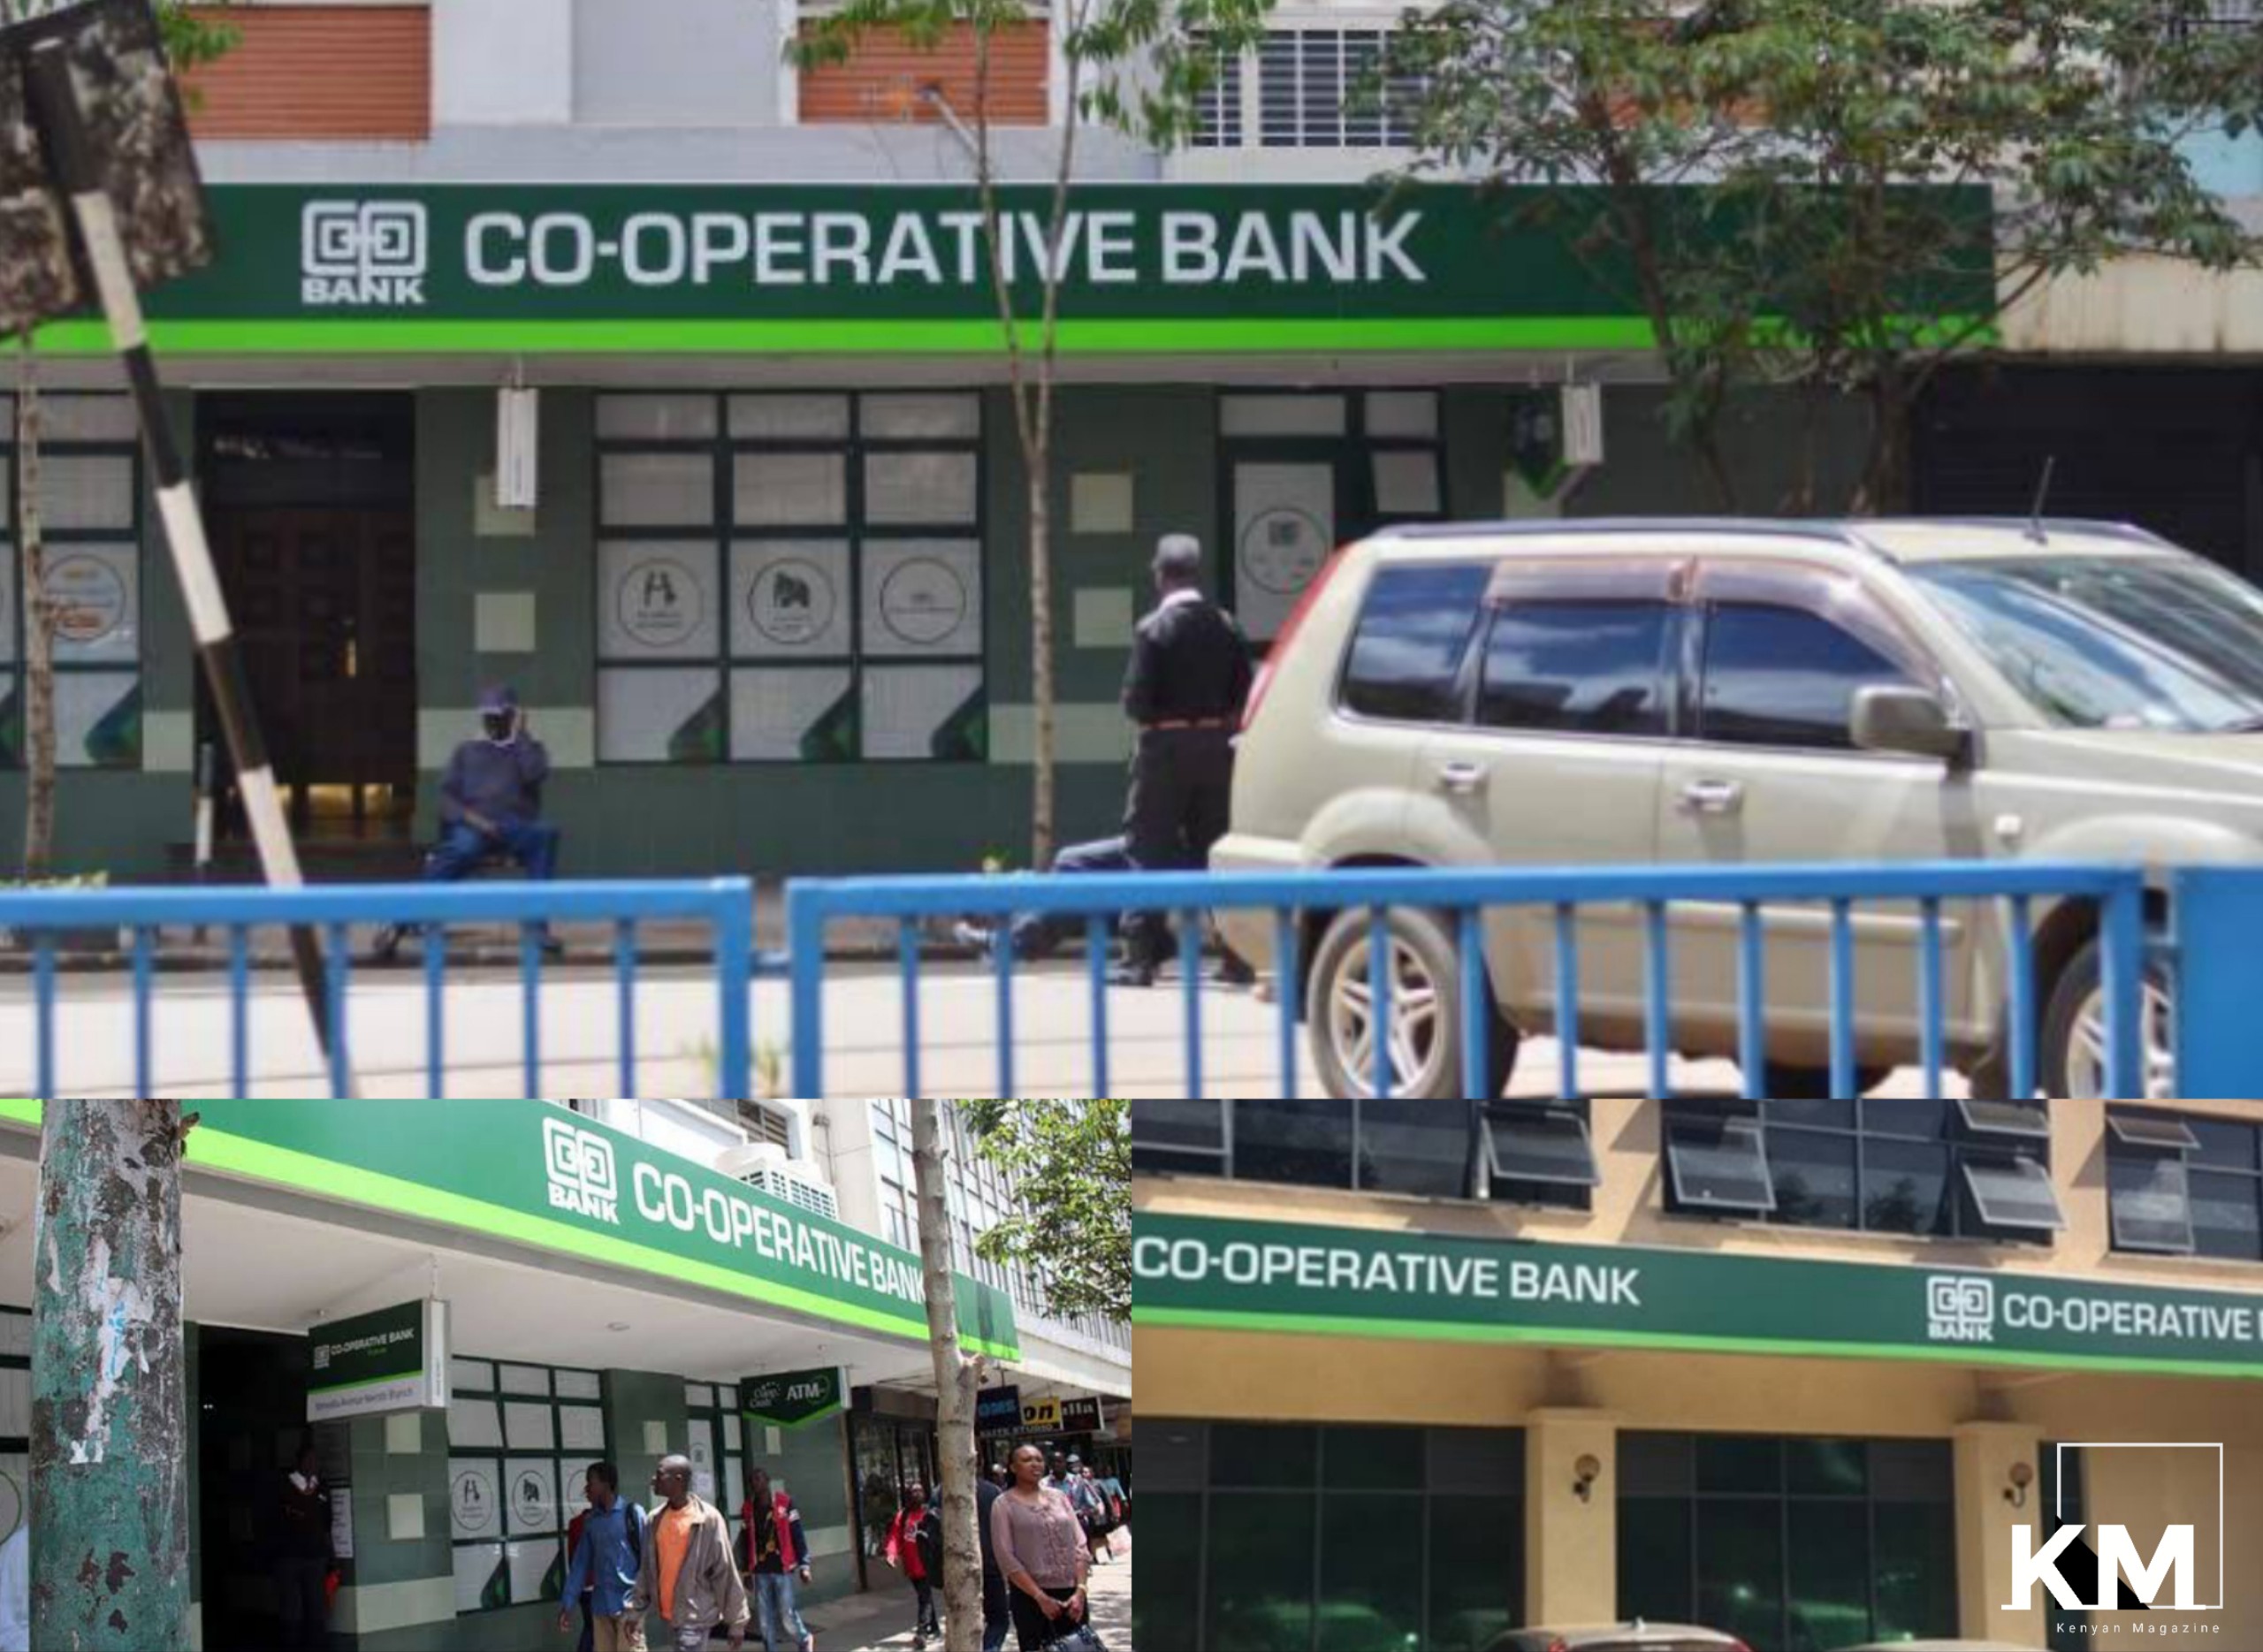 Co-operative Bank Of Kenya Branches In Nairobi and Codes